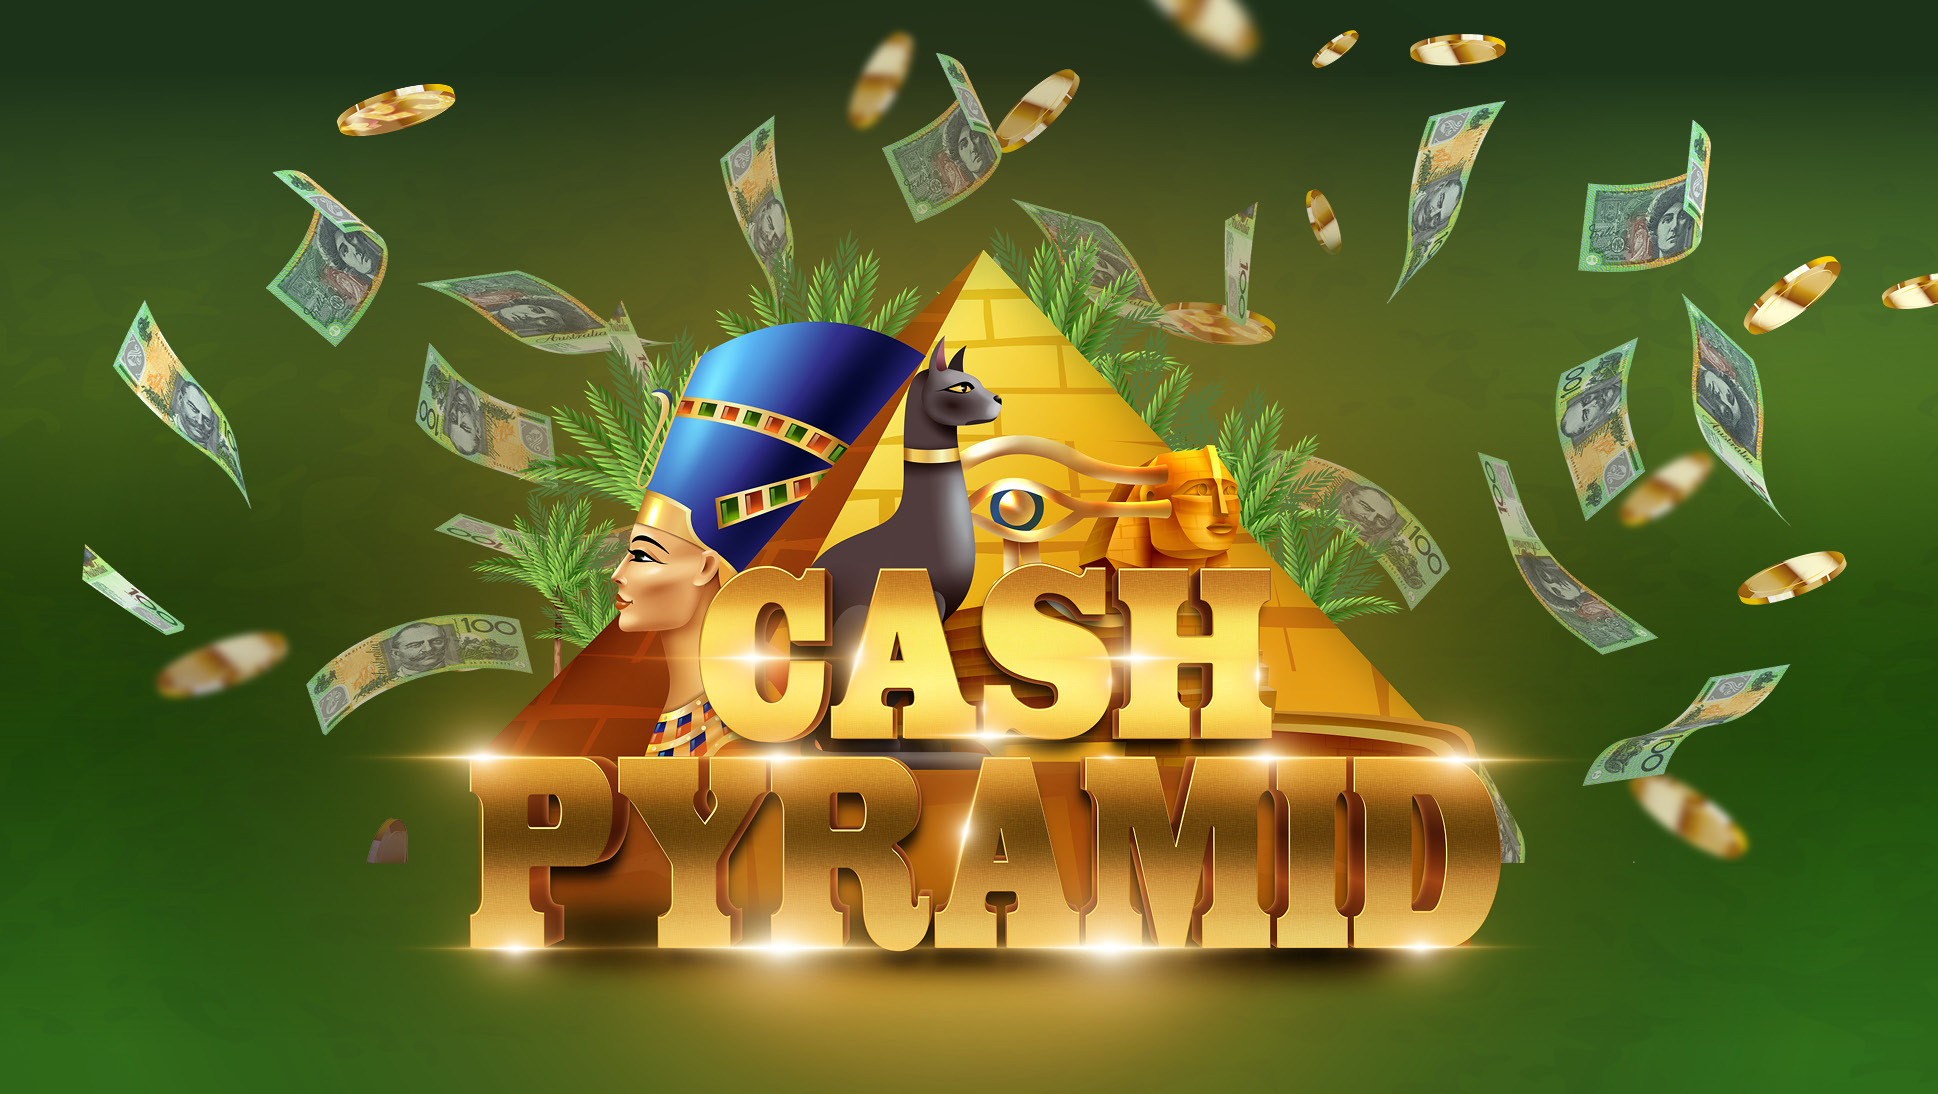 Cash Pyramid